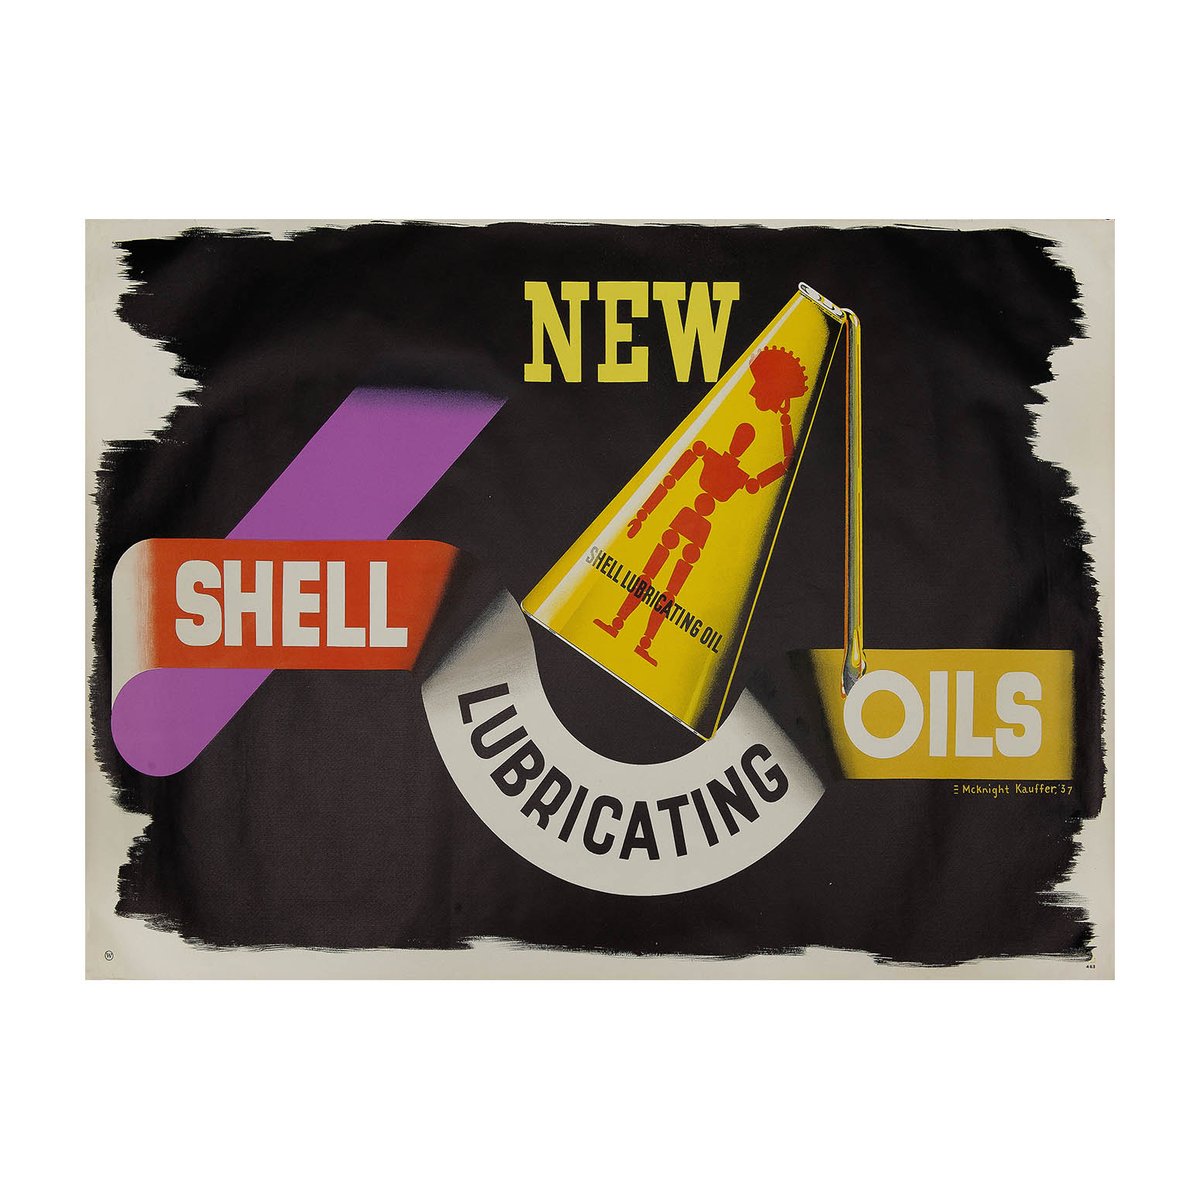 New Shell Lubricating Oils, designed by Edward McKnight Kauffer, 1937